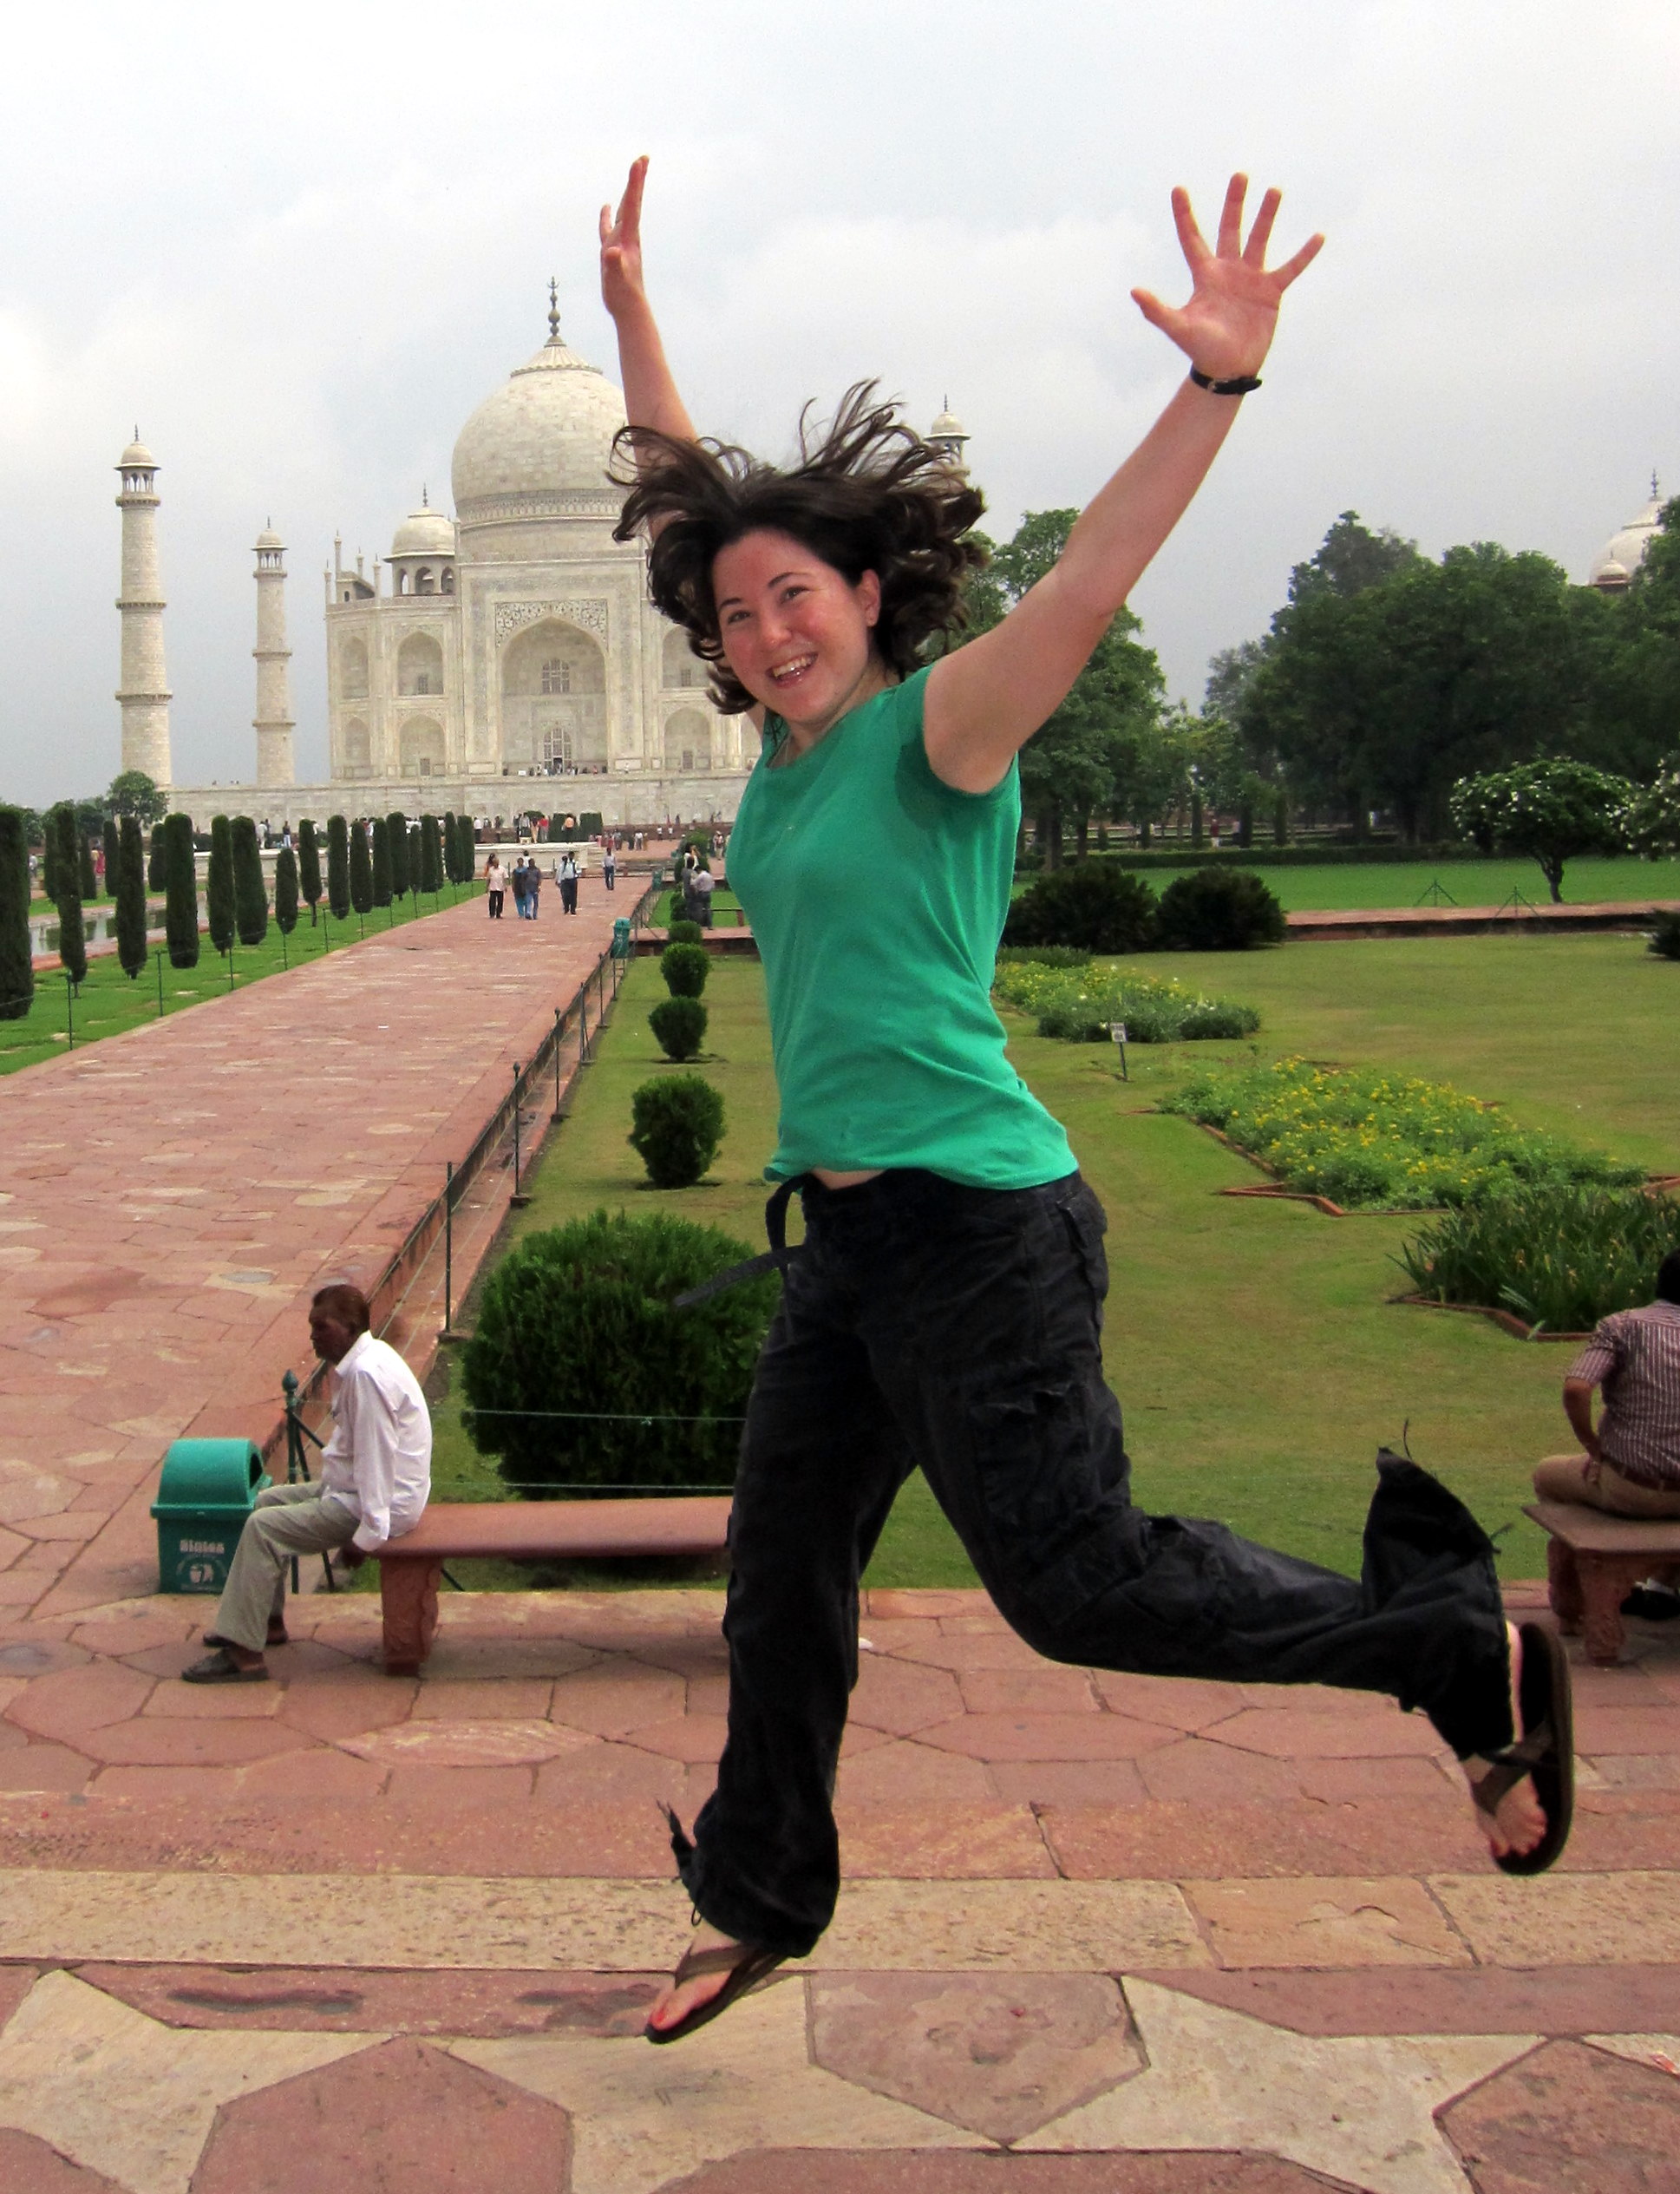 In front of the Taj Mahal